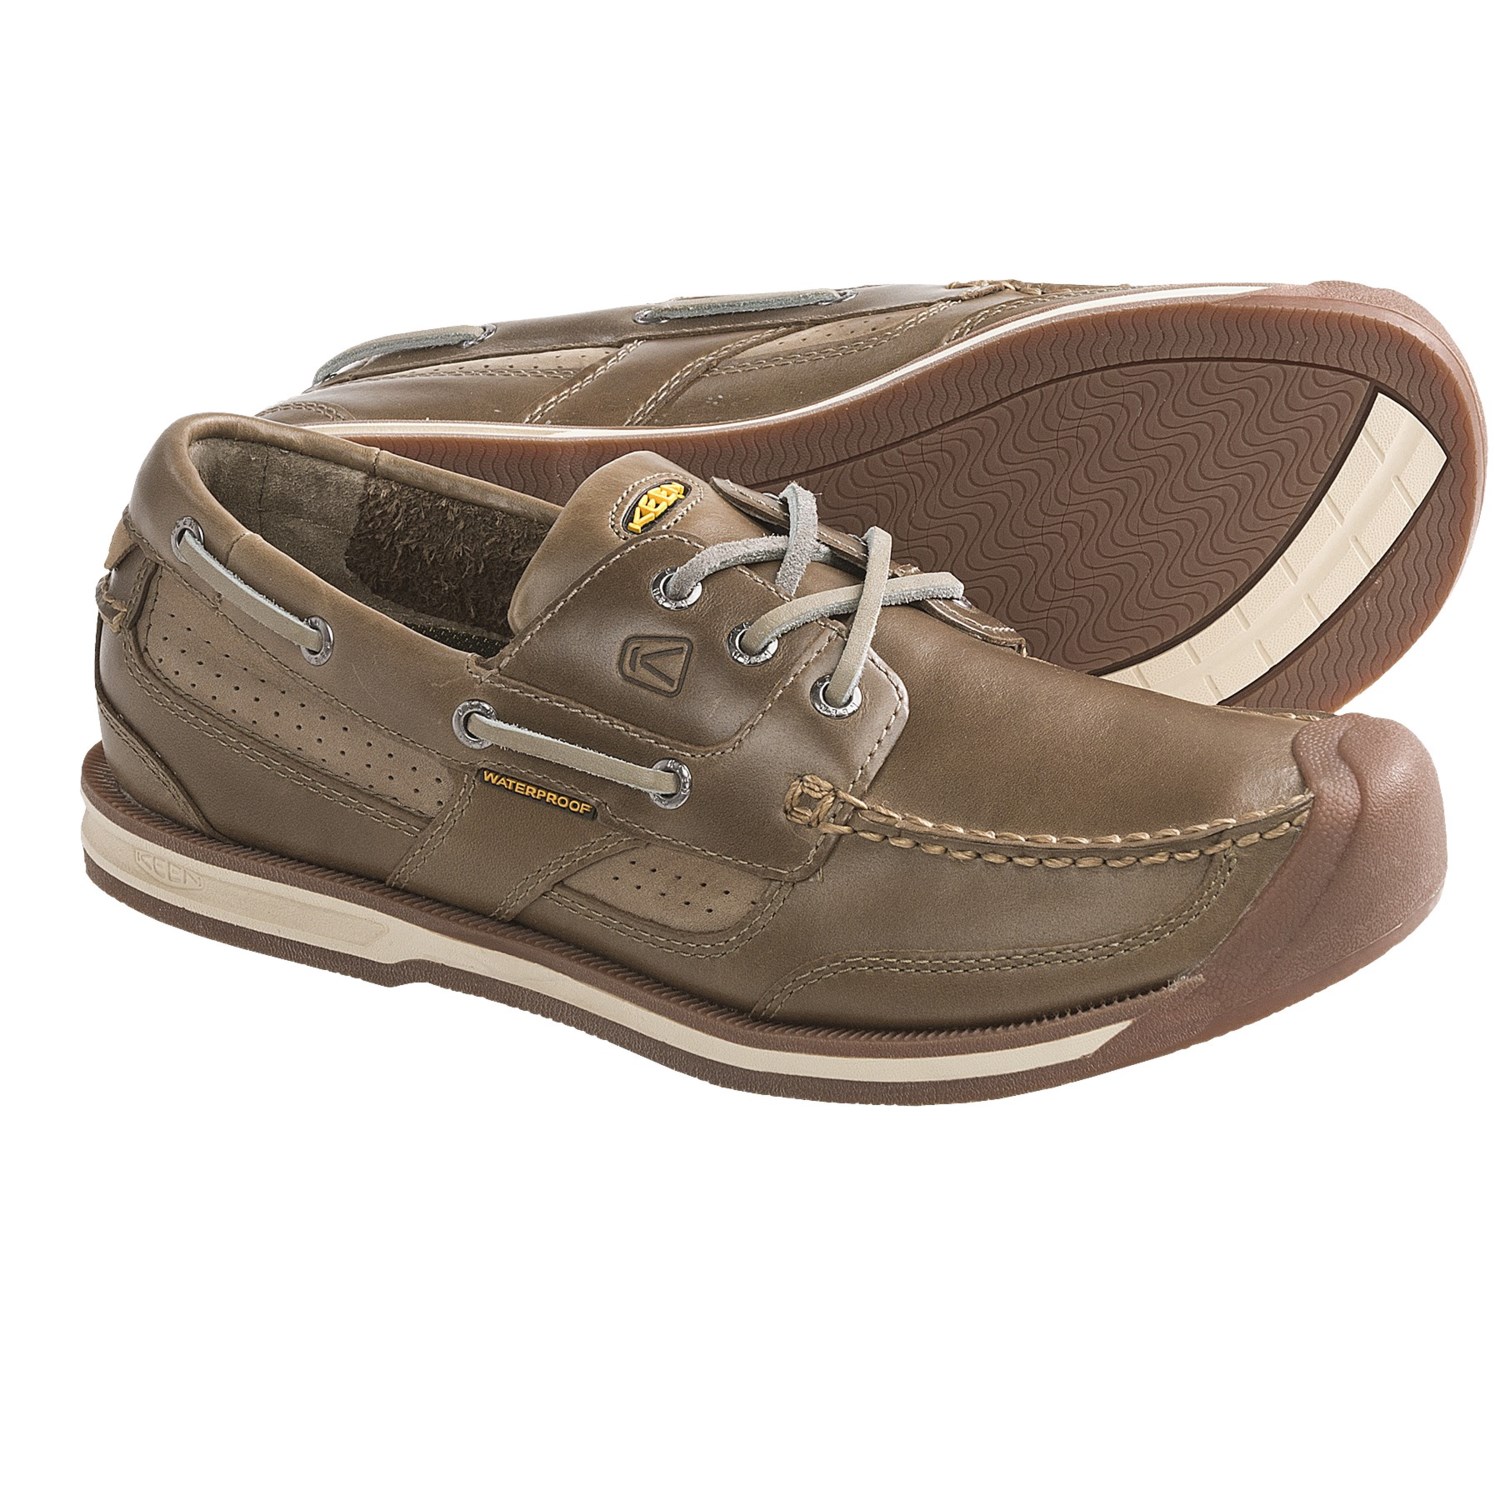 Keen Newport Boat Shoes (For Men) in Brindle